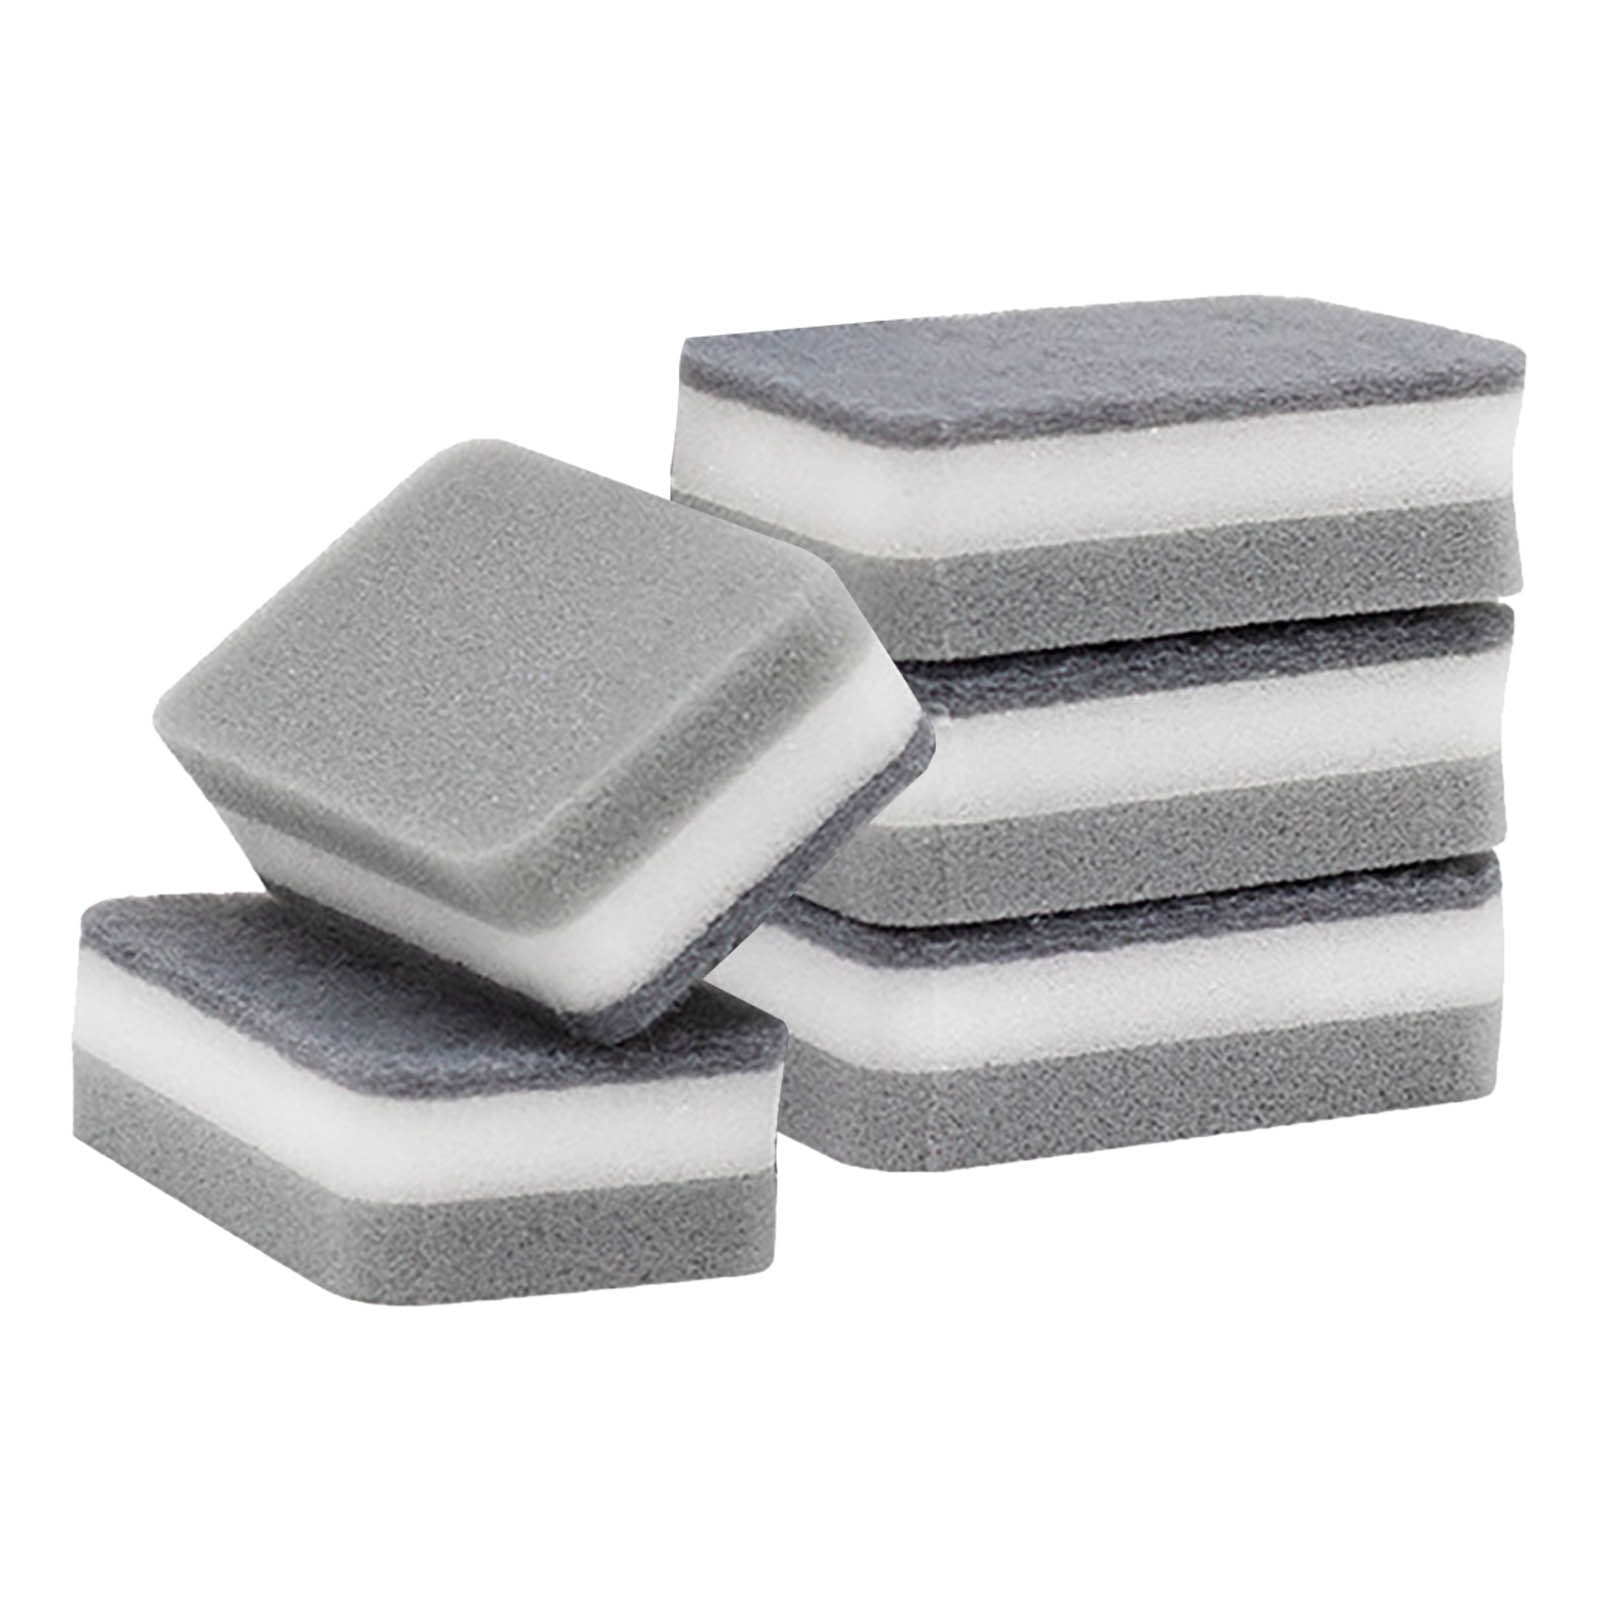 10Pcs High Quality Cleaning Magic Sponge Eraser Melamine Cleaner White 